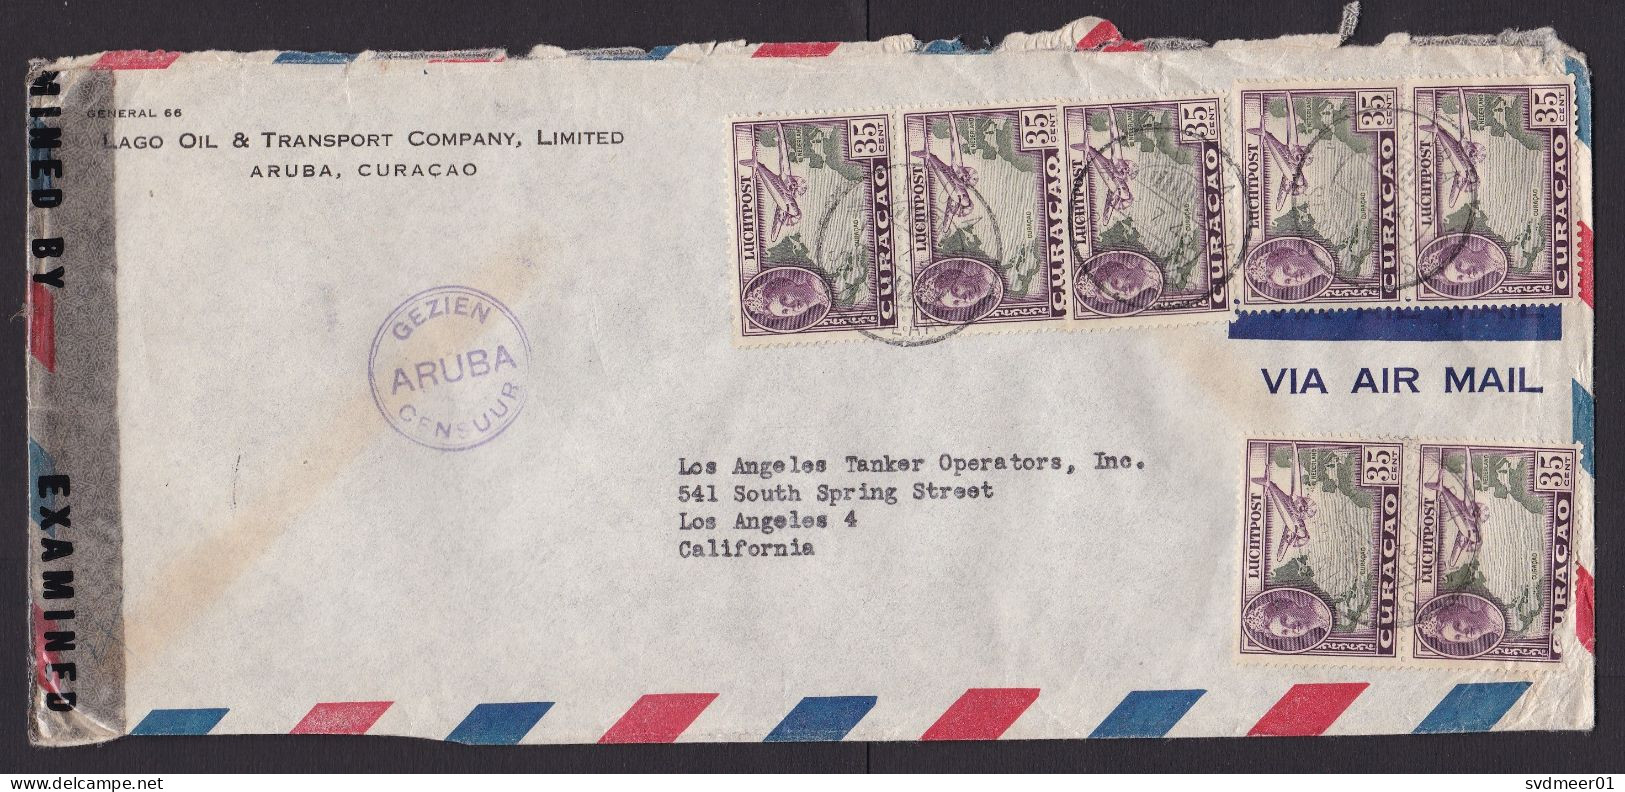 Curacao: Airmail Cover To USA, 1945, 7 Stamps, Map, 2x Censored: US Censor Tape, Aruba Cancel, War, Oil (damaged) - Curazao, Antillas Holandesas, Aruba